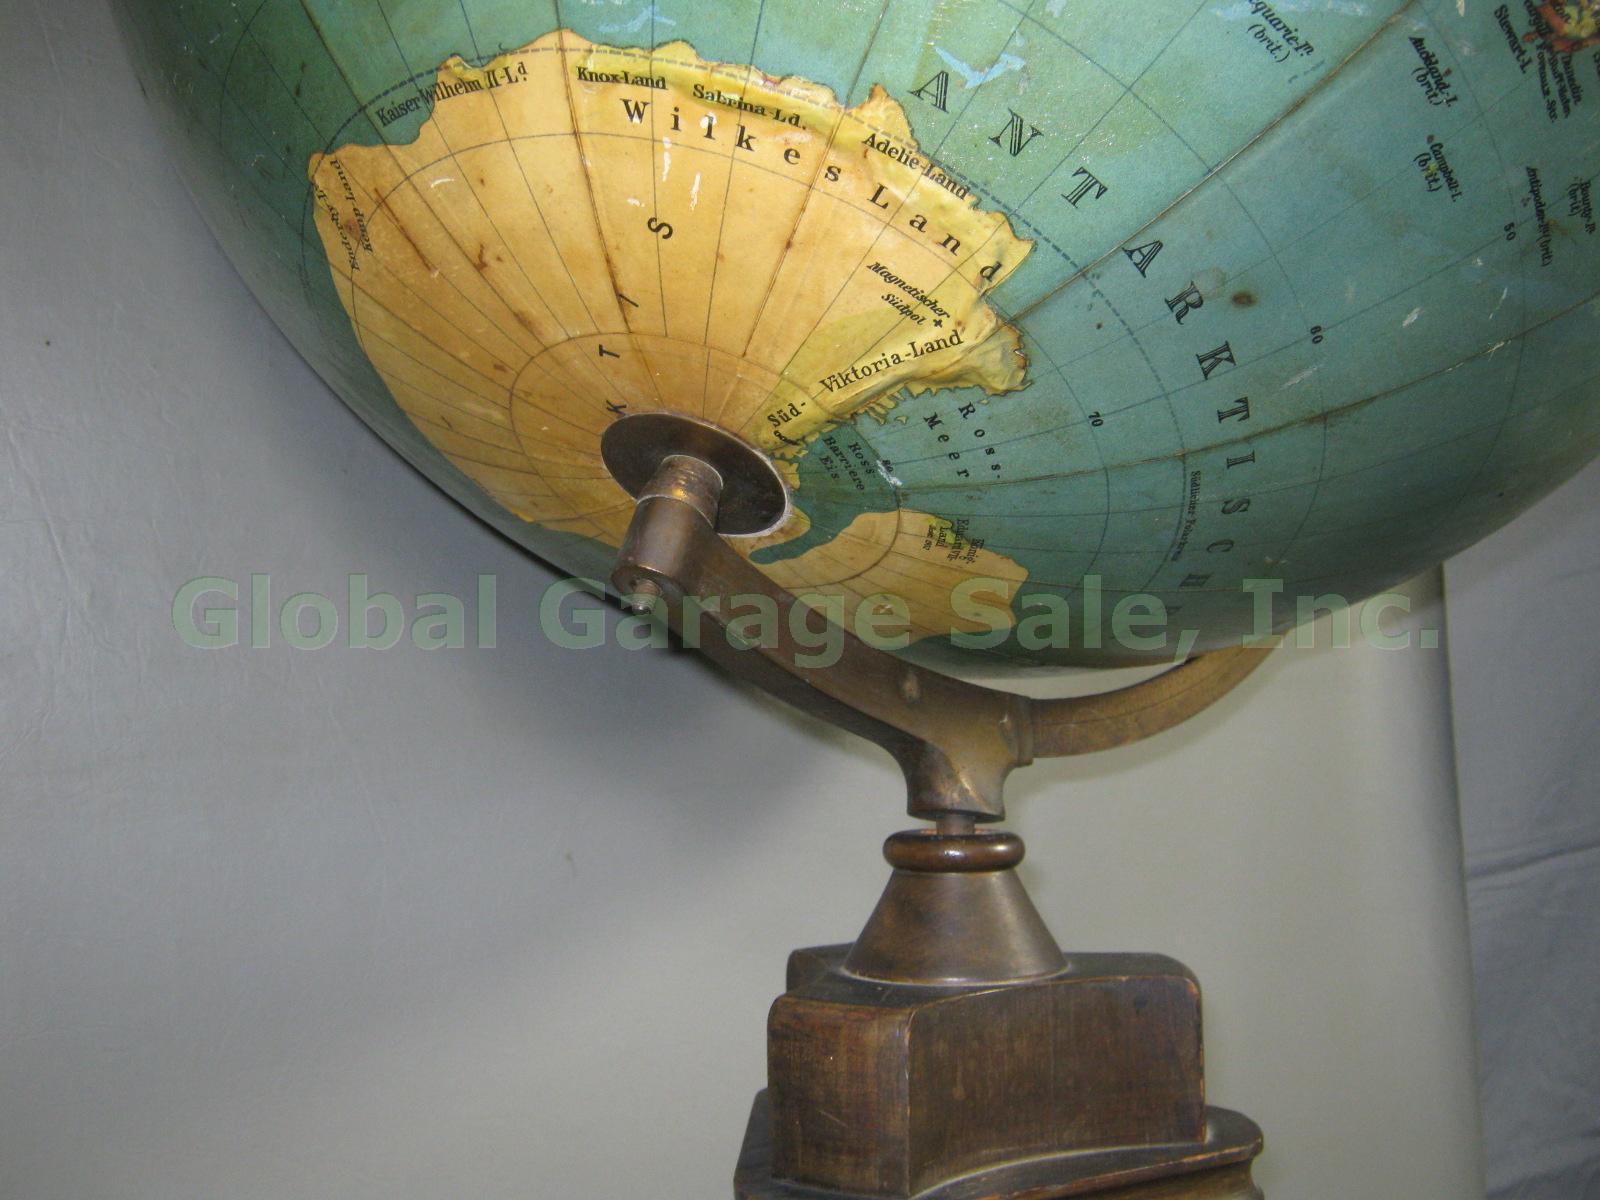 Antique c.1902 Rath 26" World Globe North German Lloyd Bremen Shipping Routes 17